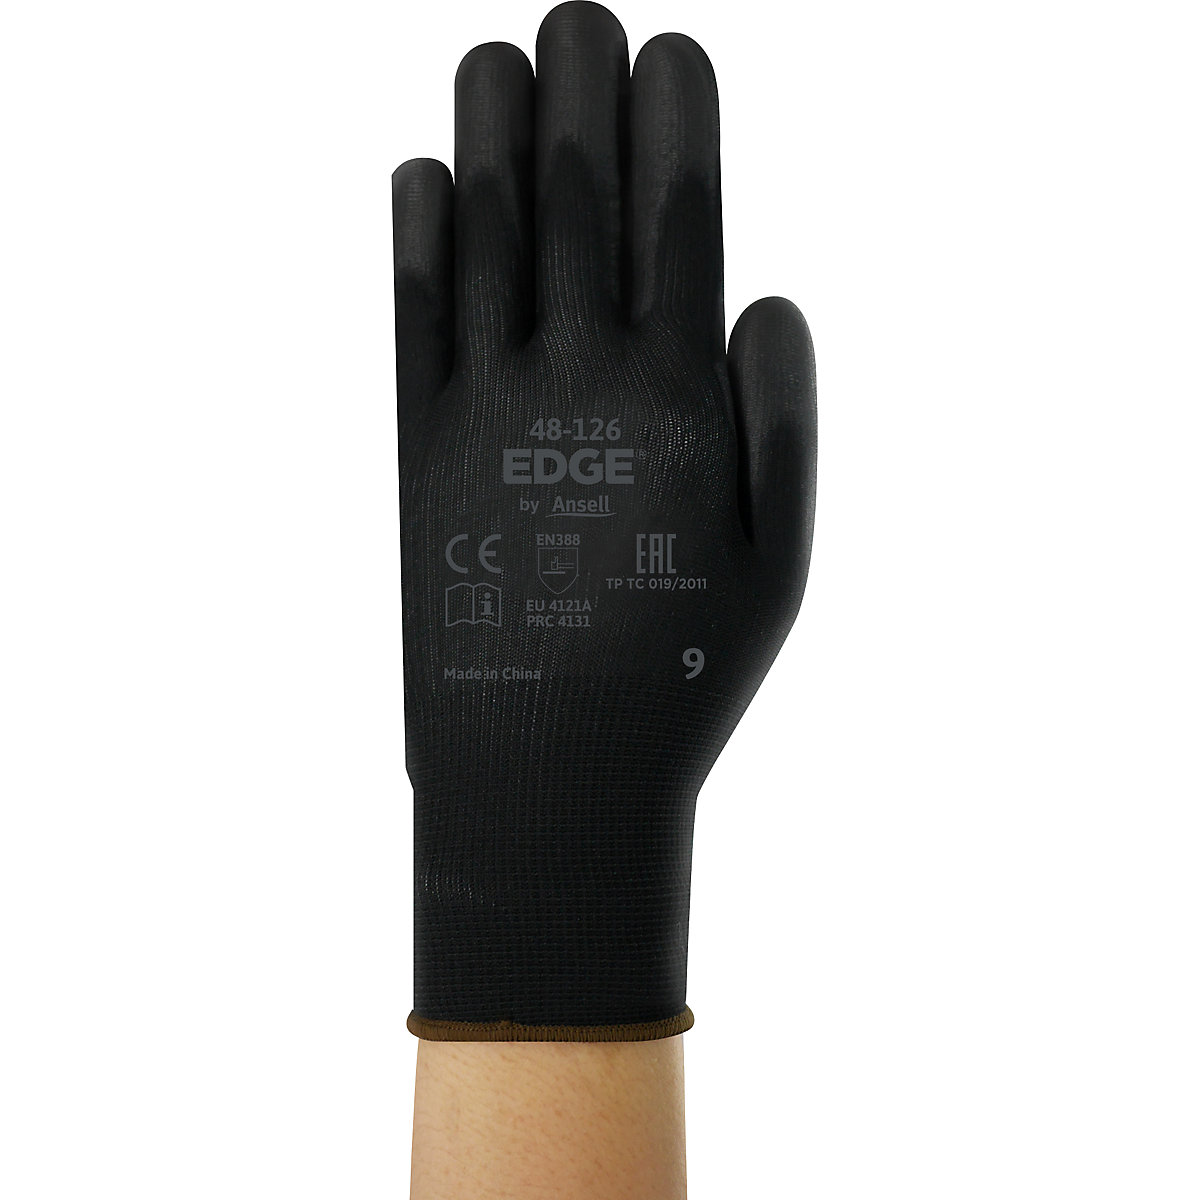 Delovne rokavice EDGE® 48-126 – Ansell